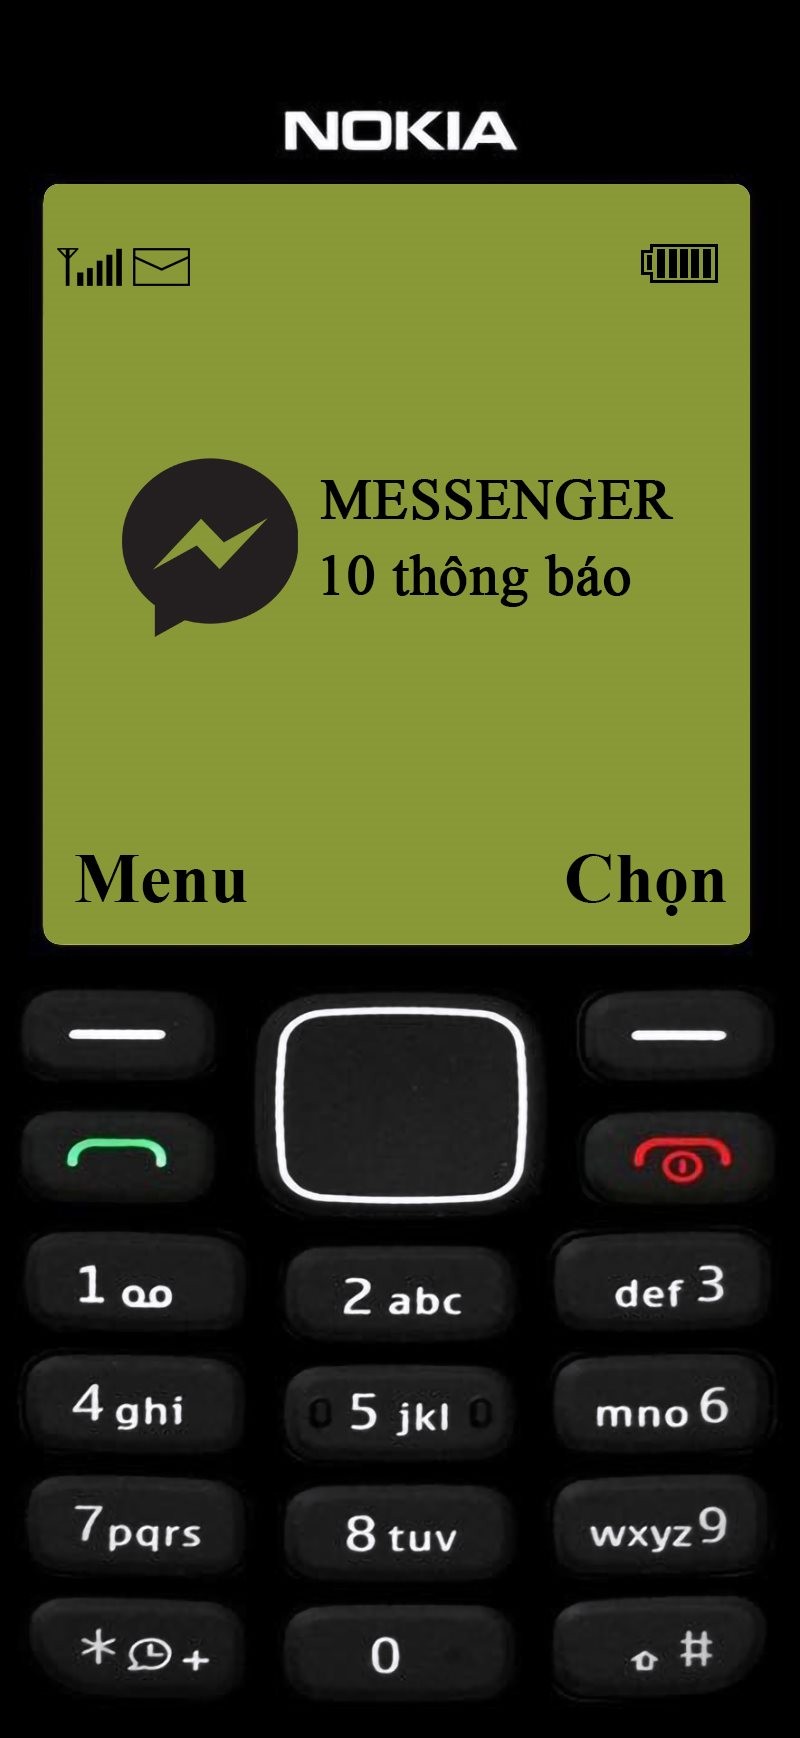 Tong hop hinh nen “cai trang” smartphone thanh Nokia 1280-Hinh-2